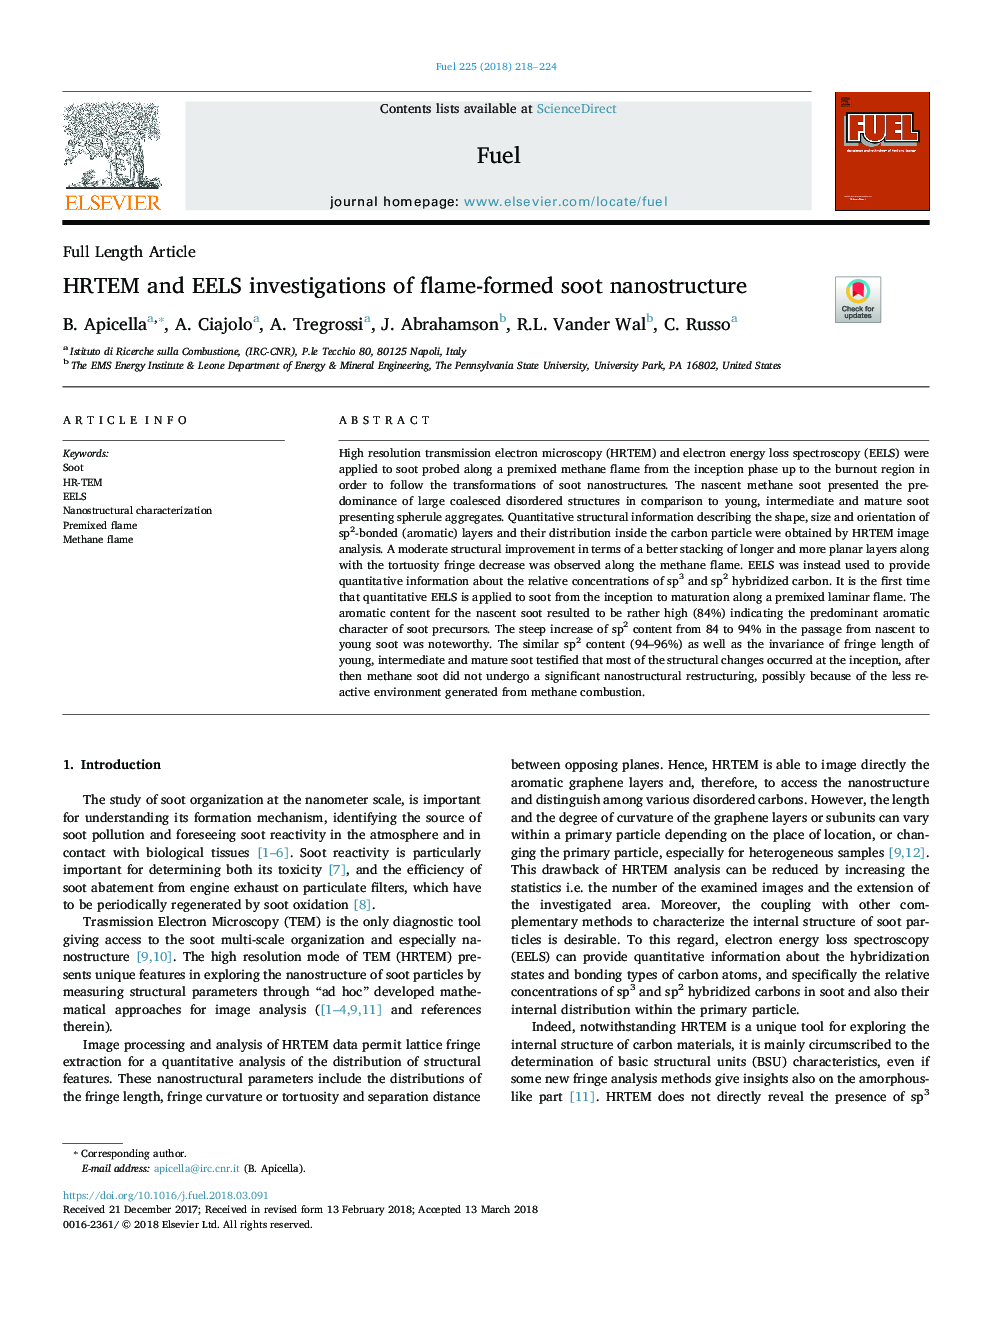 HRTEM and EELS investigations of flame-formed soot nanostructure